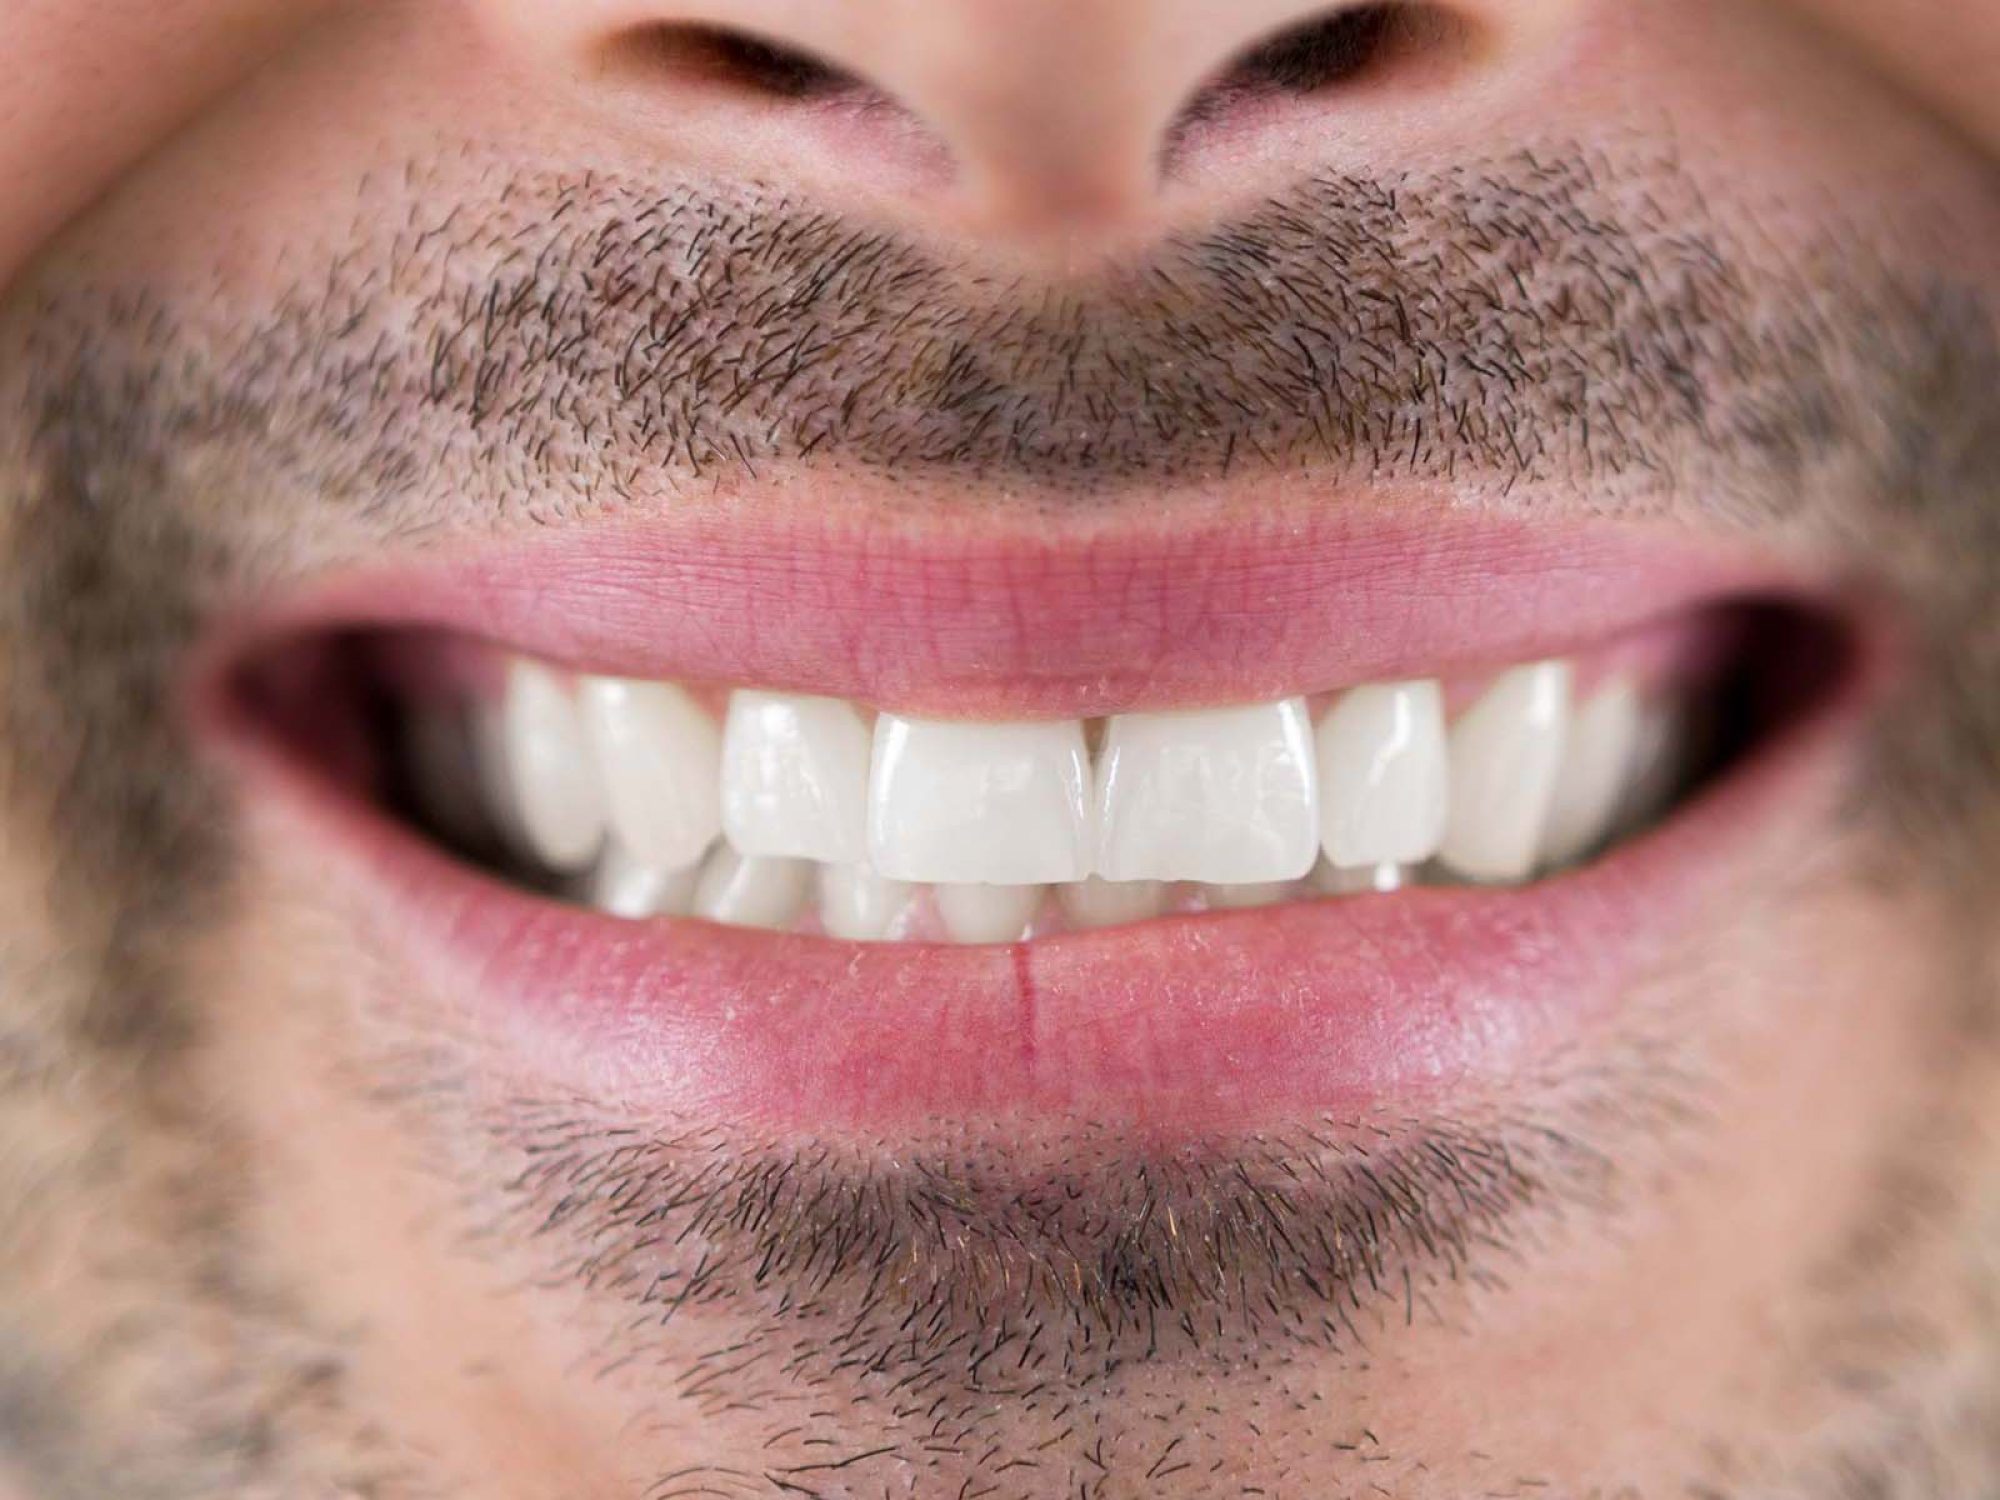 man-showing-his-teeth4-YUFNXWG.jpg